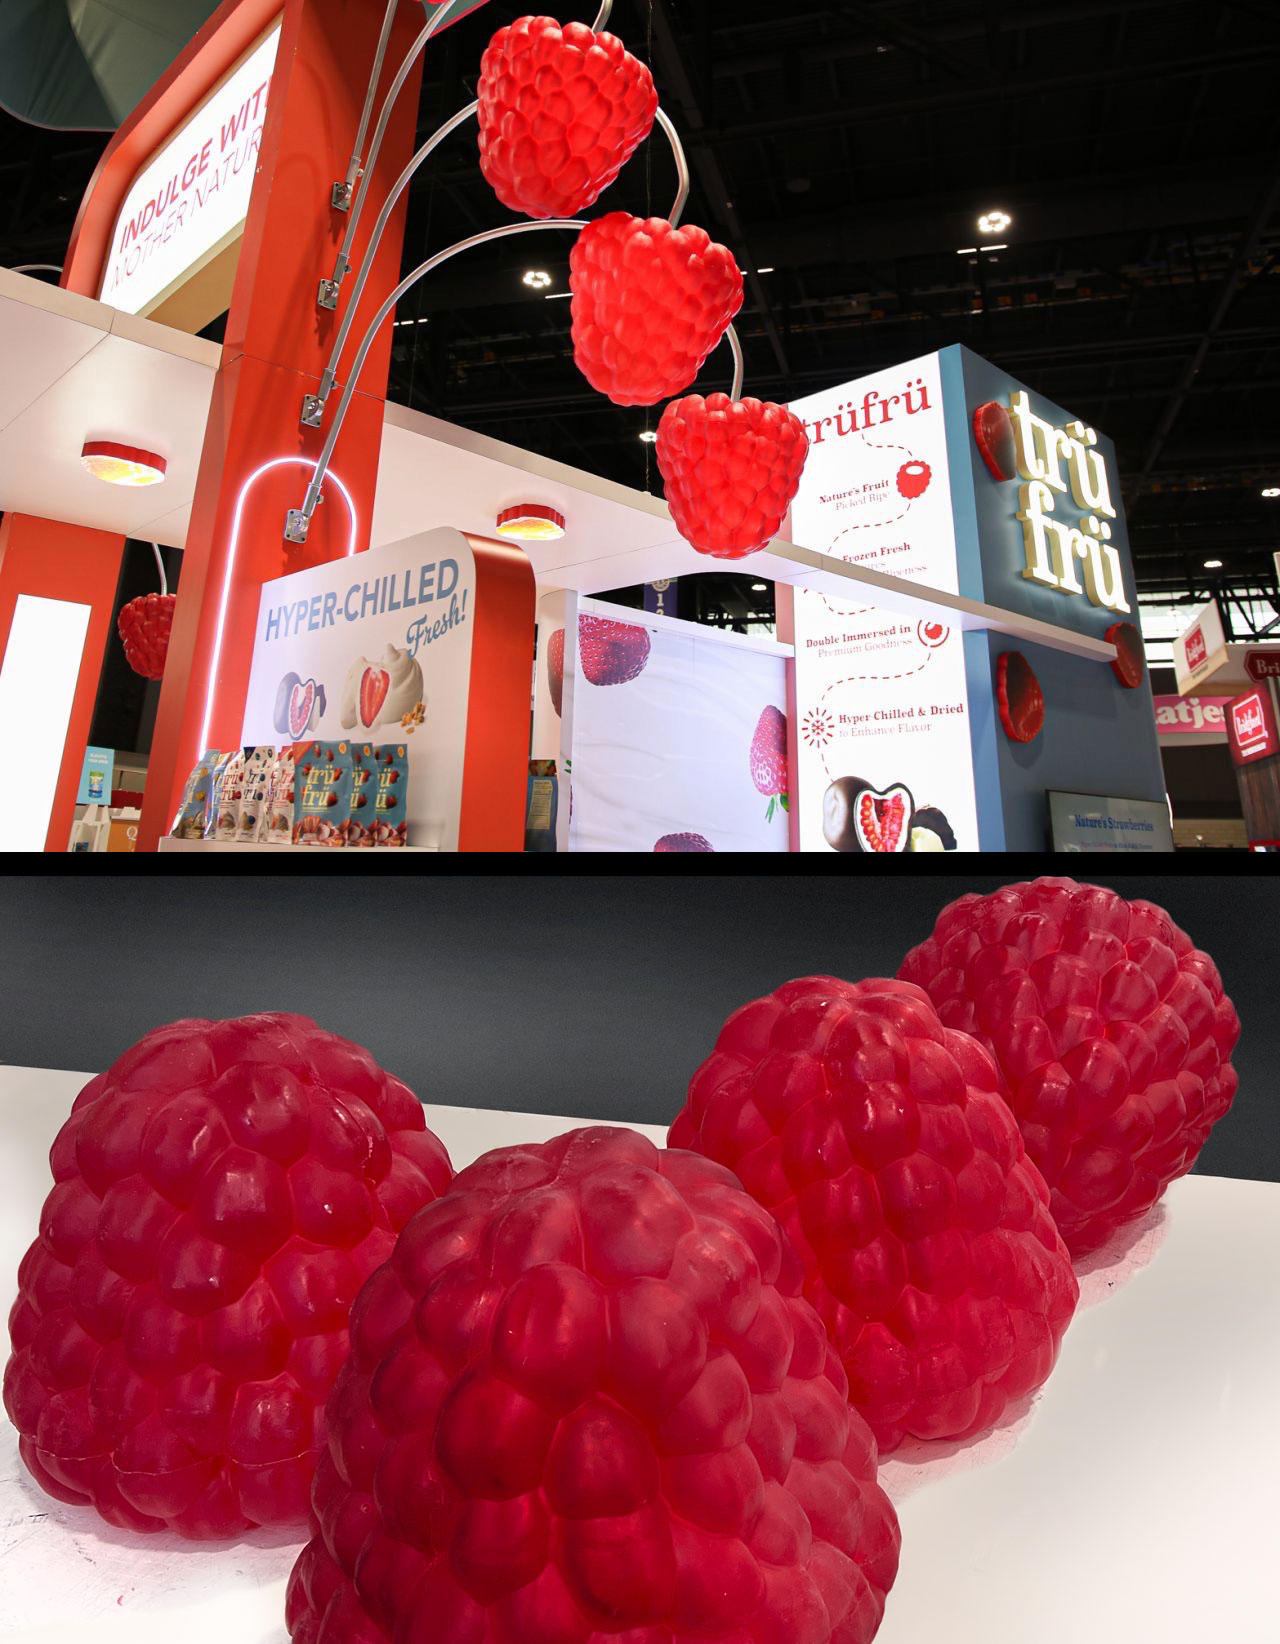 Raspberry illuminated 3D replica props for TruFru dessert trade show display.